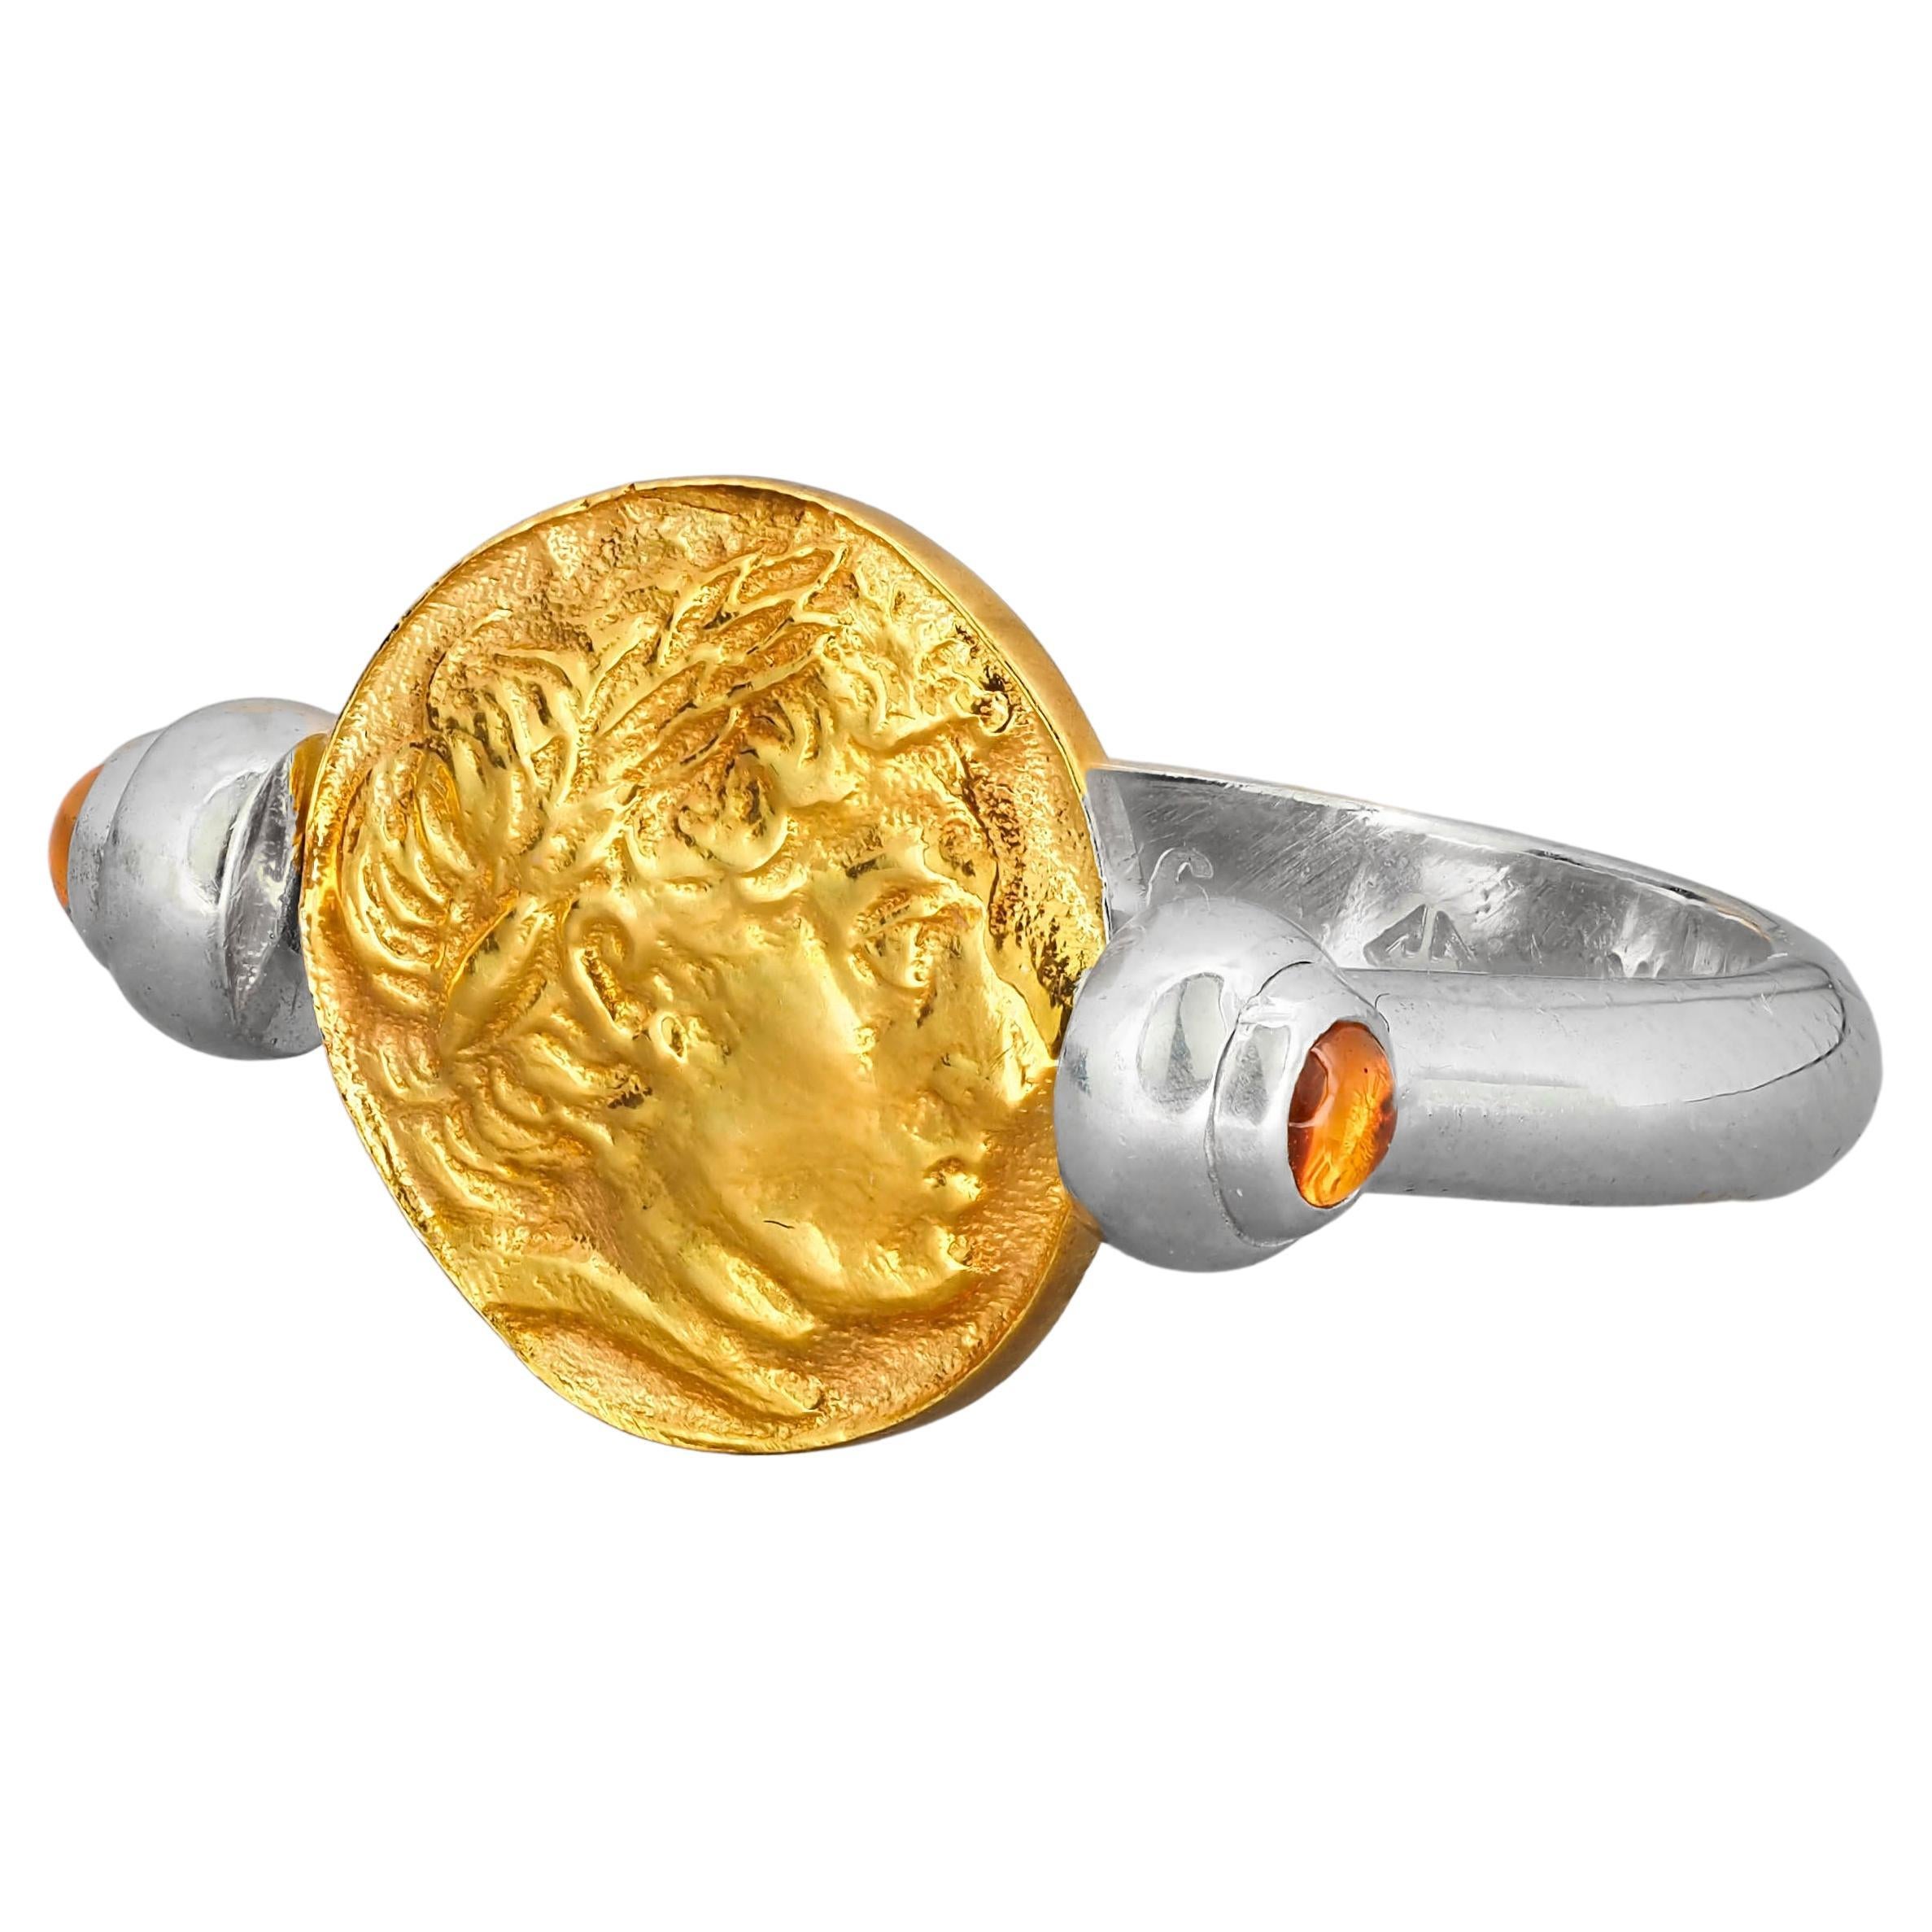 Goldmünze-Ring, gelber Saphir-Ring, antiker Münzring